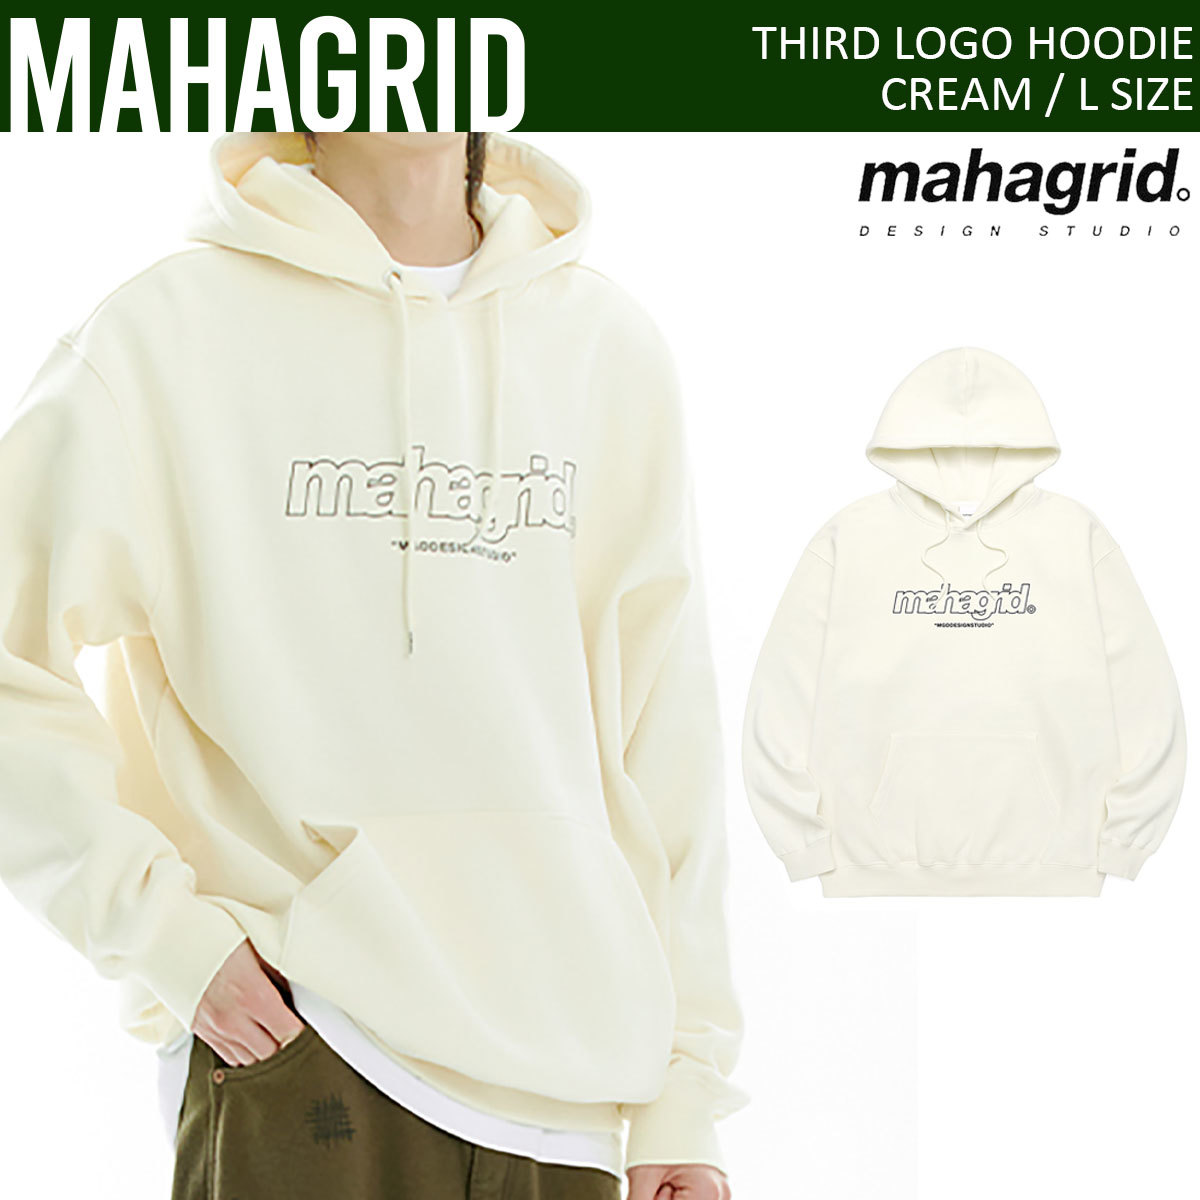 【 mahagrid 】 THIRD LOGO HOODIE マハグリッド 正規品 シンプル サード ロゴ プリント パーカー クリーム Lサイズ